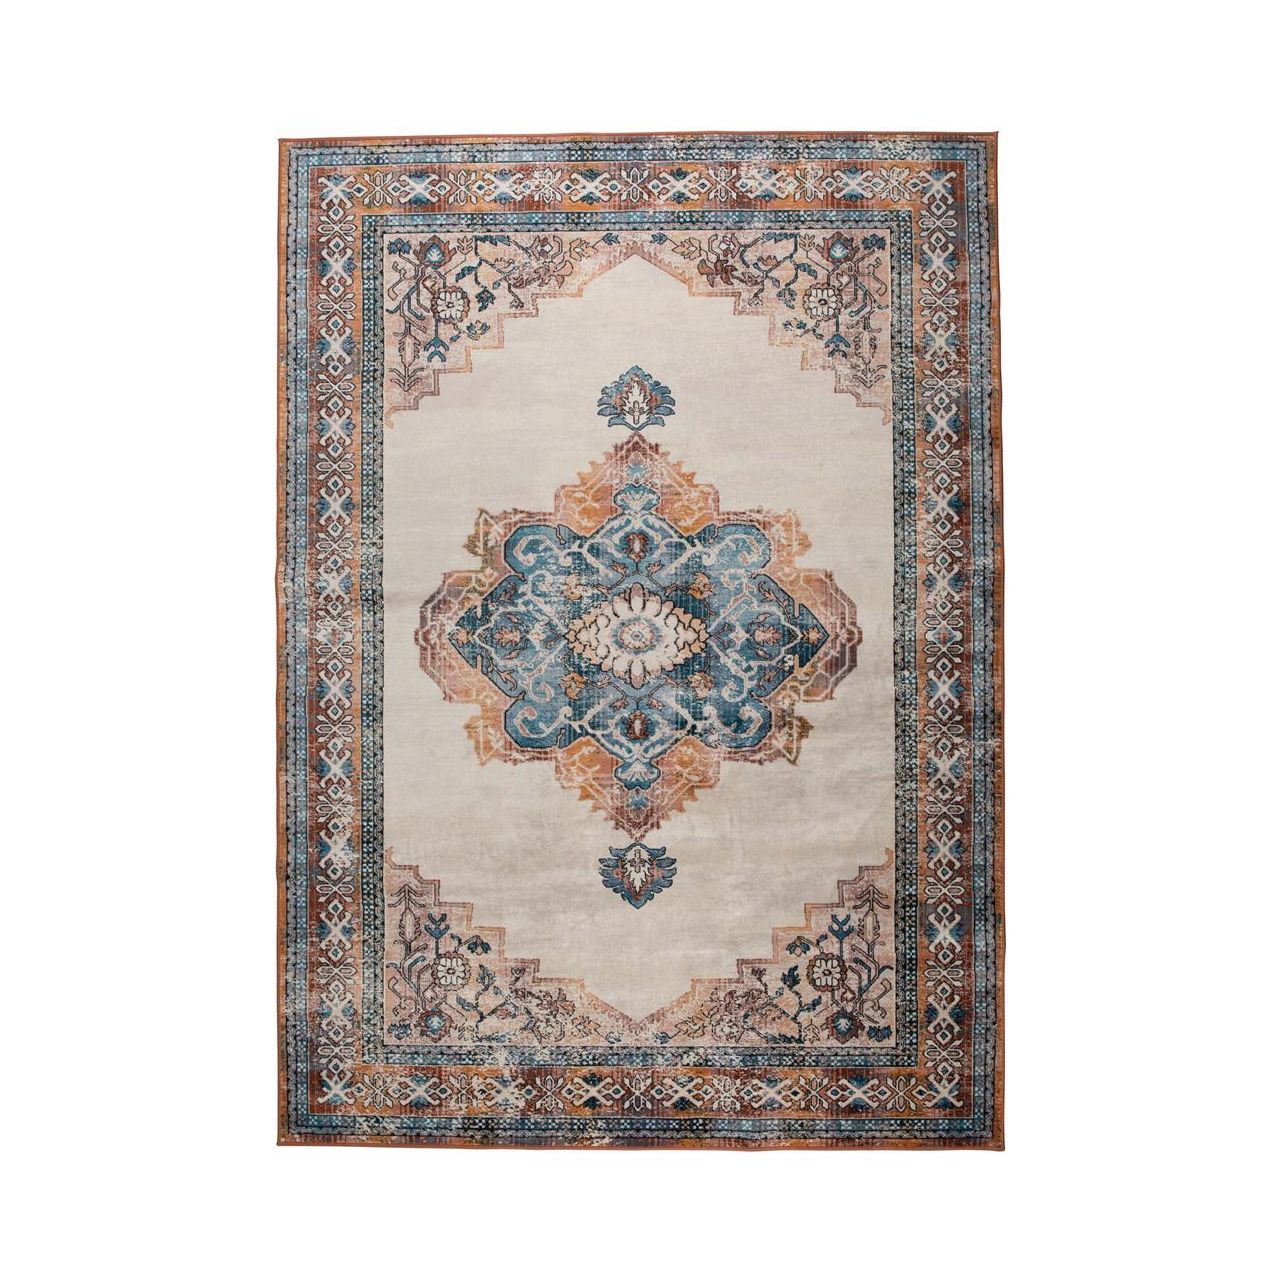 Carpet mahal blue/brick 170x240